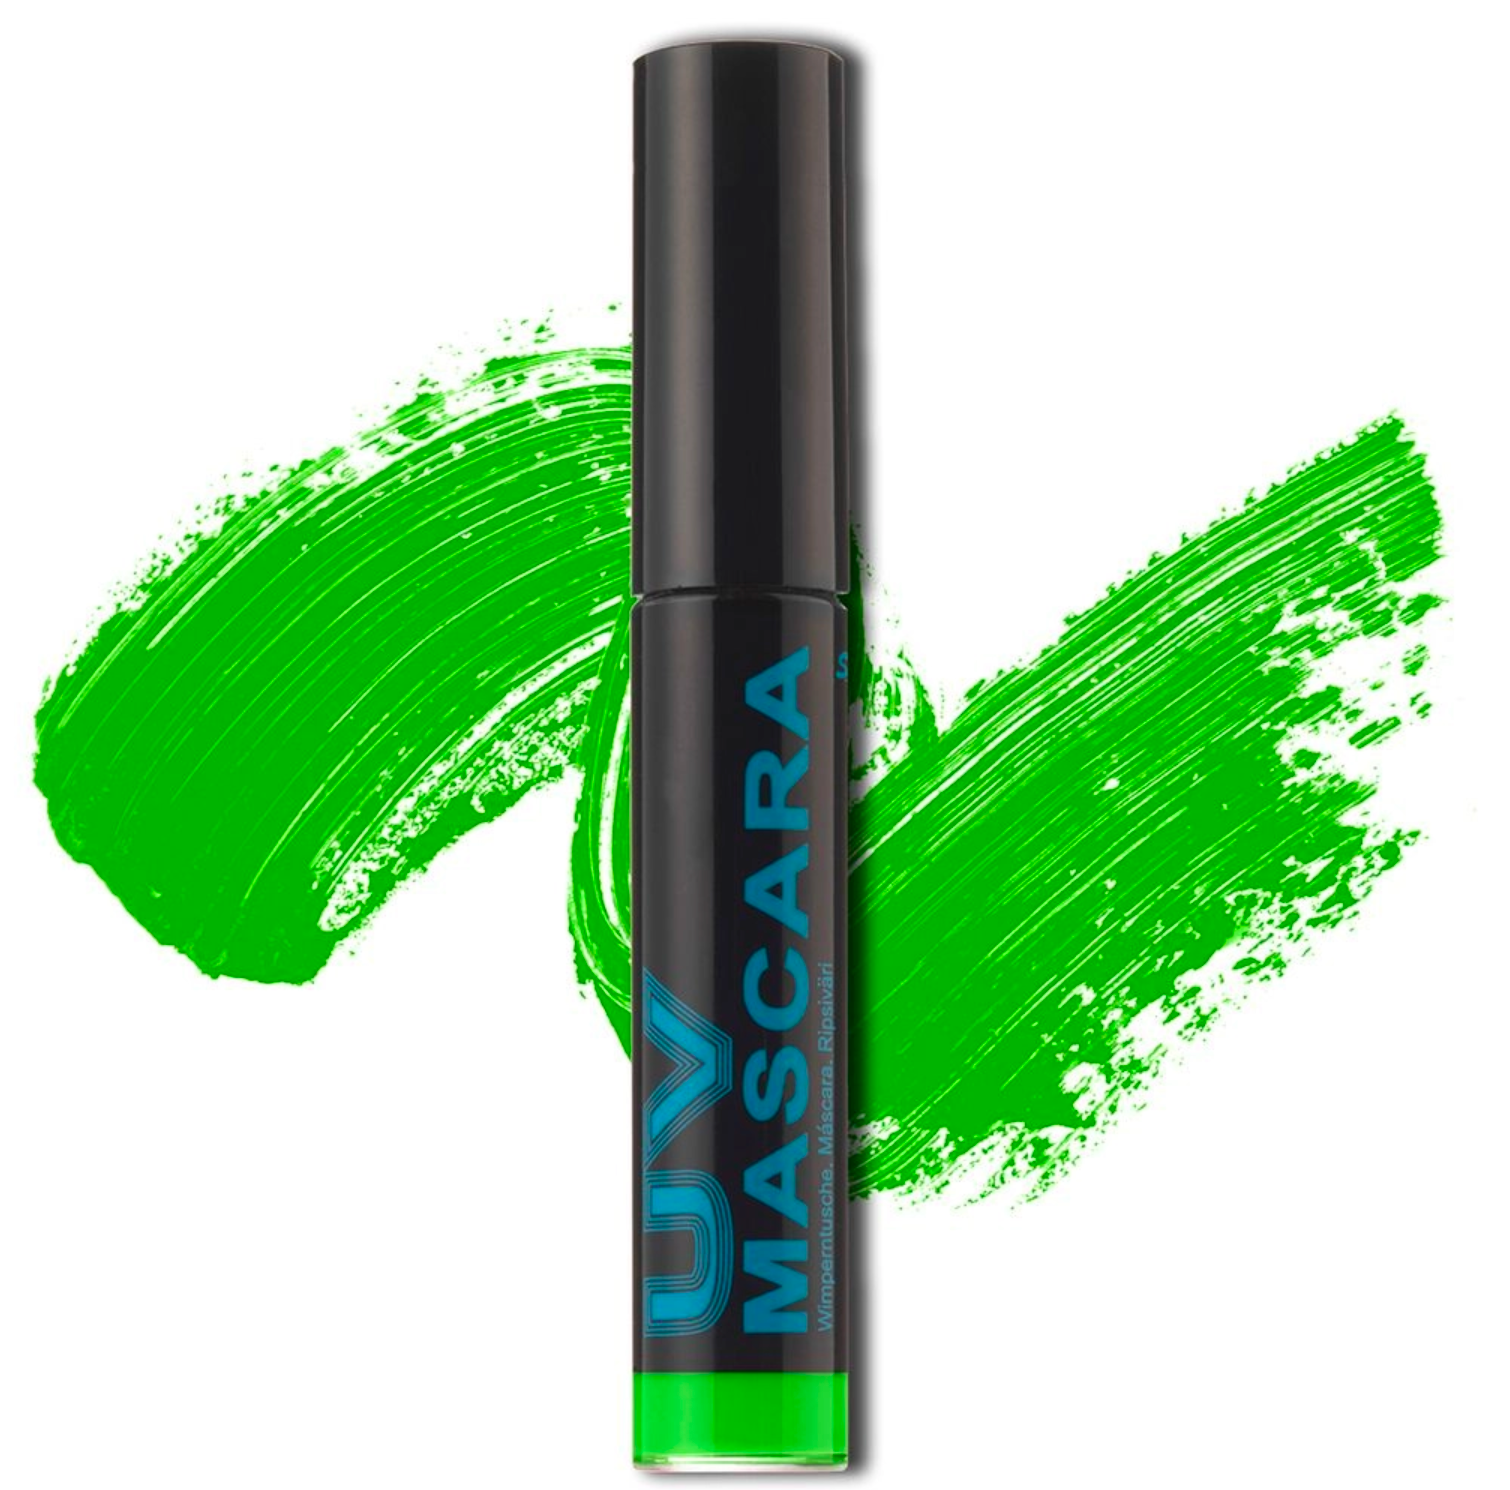 Stargazer cosmetics Neon, Green Mascara